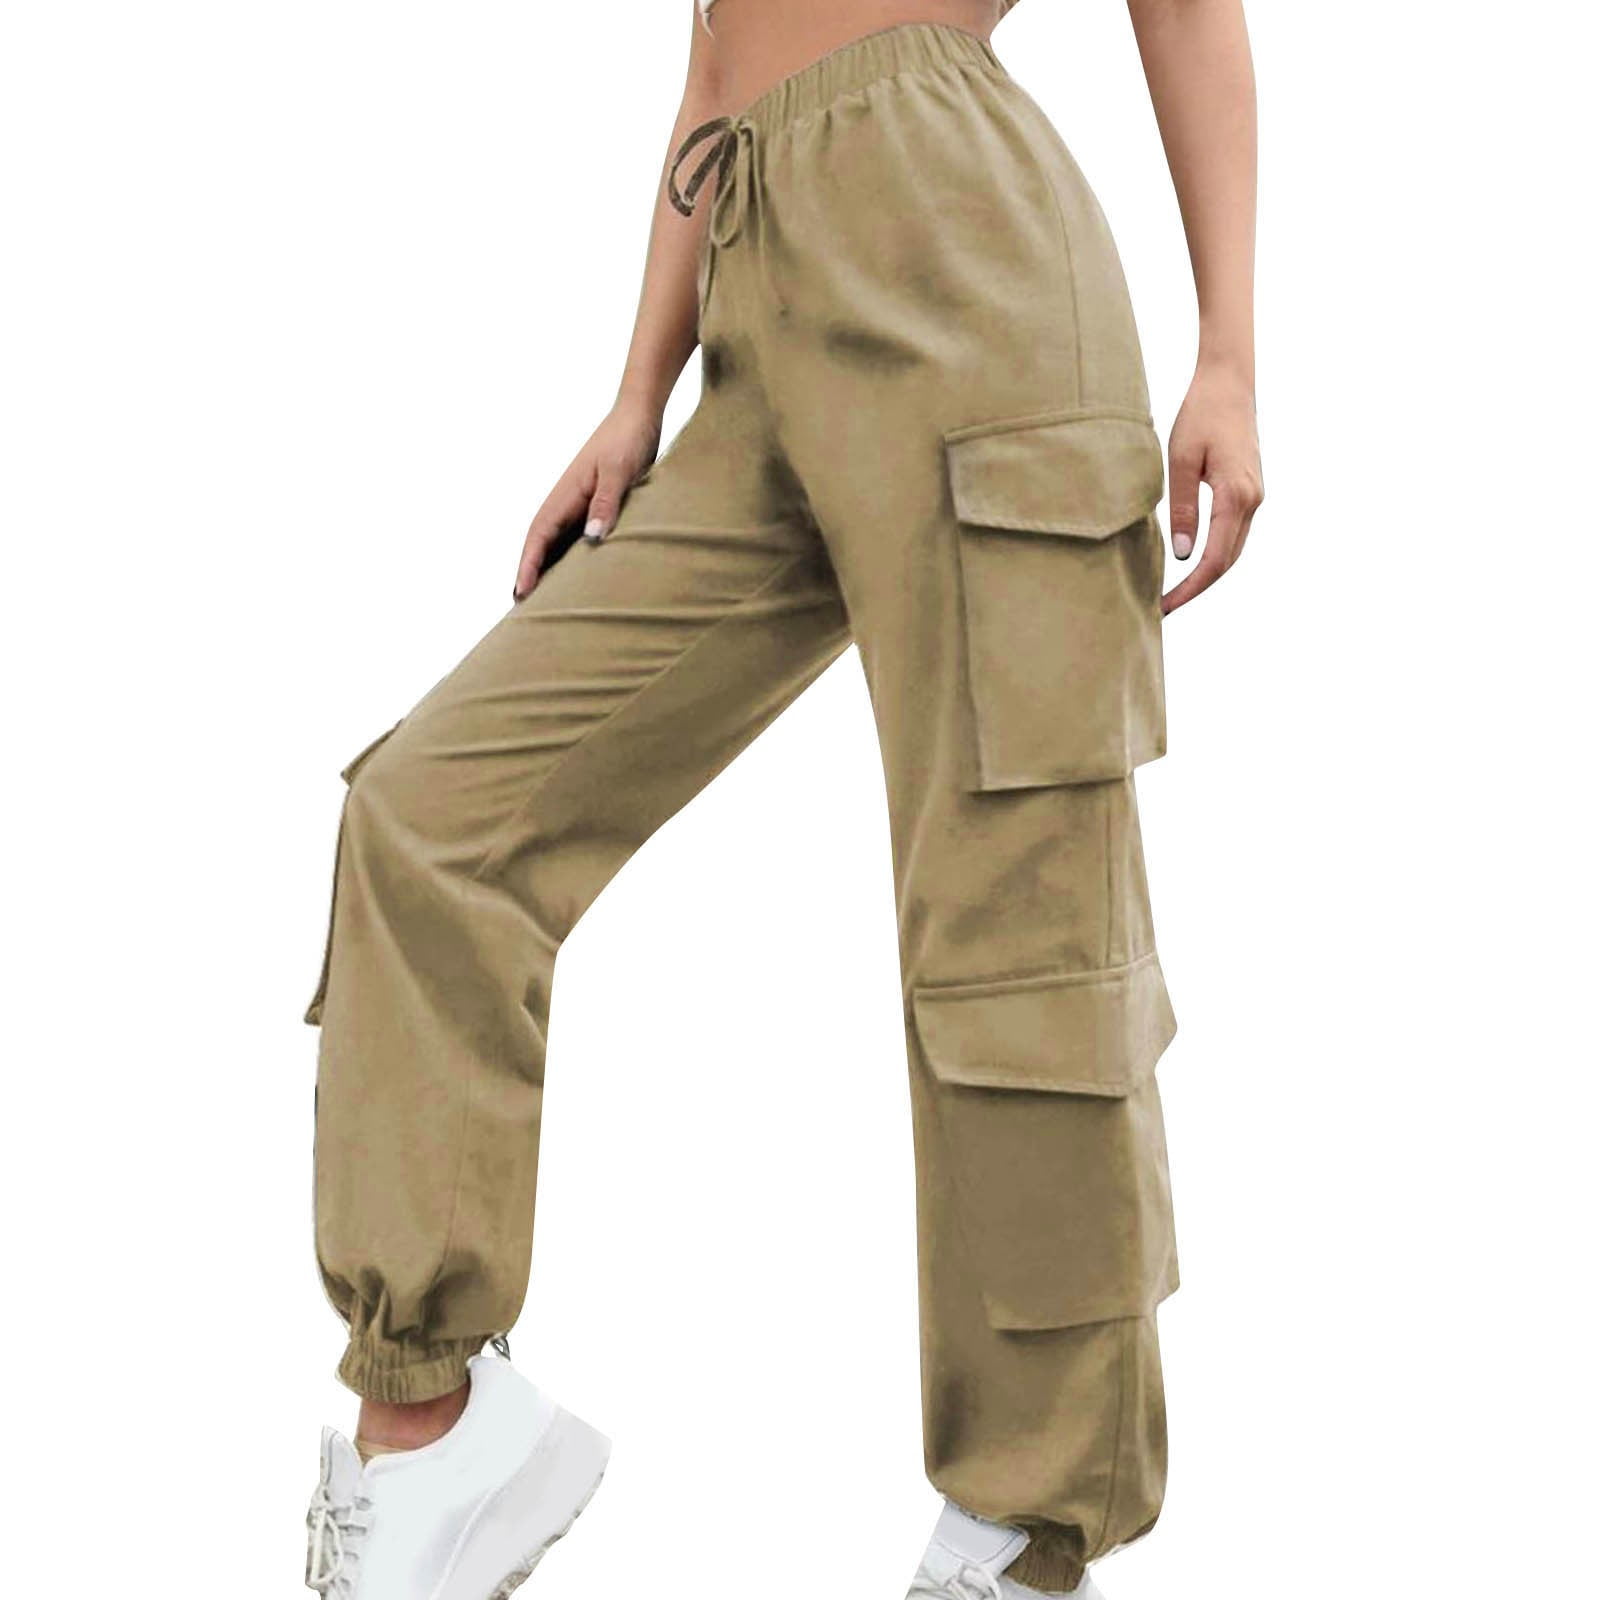 adviicd Business Casual Pants For Women Tall Long Shorts For Women Casual  Summer Womens Tapered Pants Cotton Linen Drawstring Back Elastic Waist  Pants